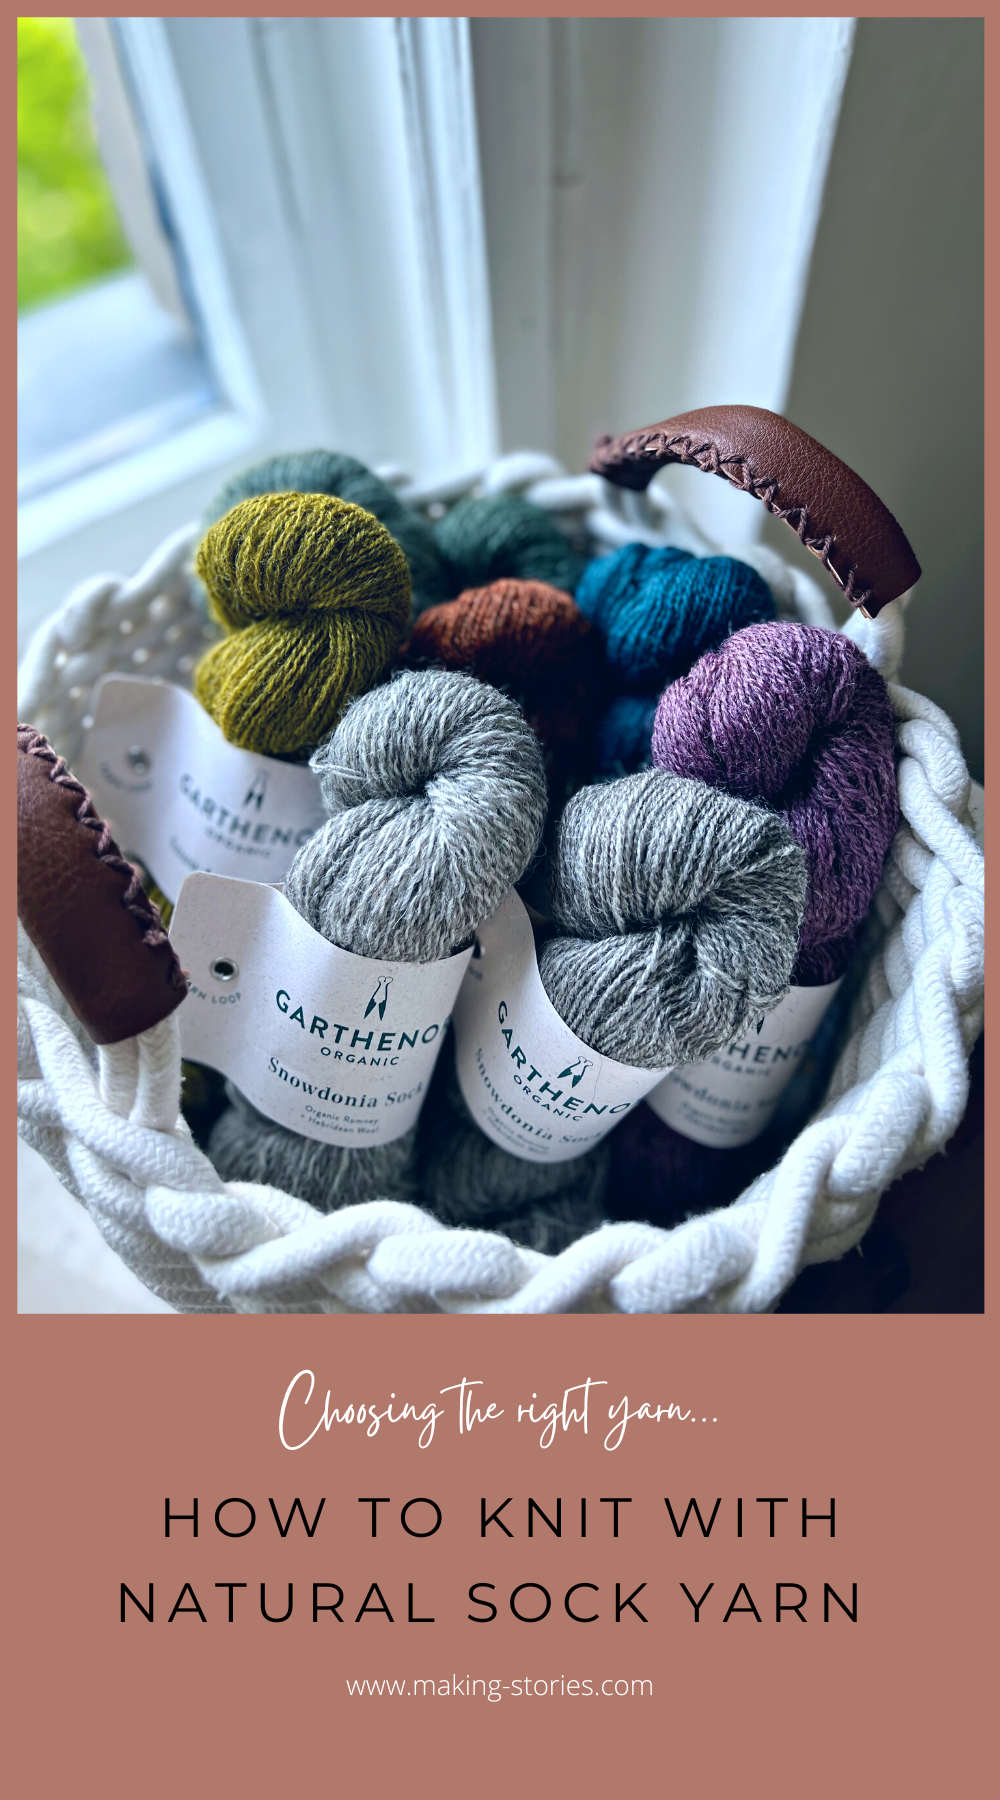 Buy wholesale Knit Happens Knitting Mug - Knitting Gifts